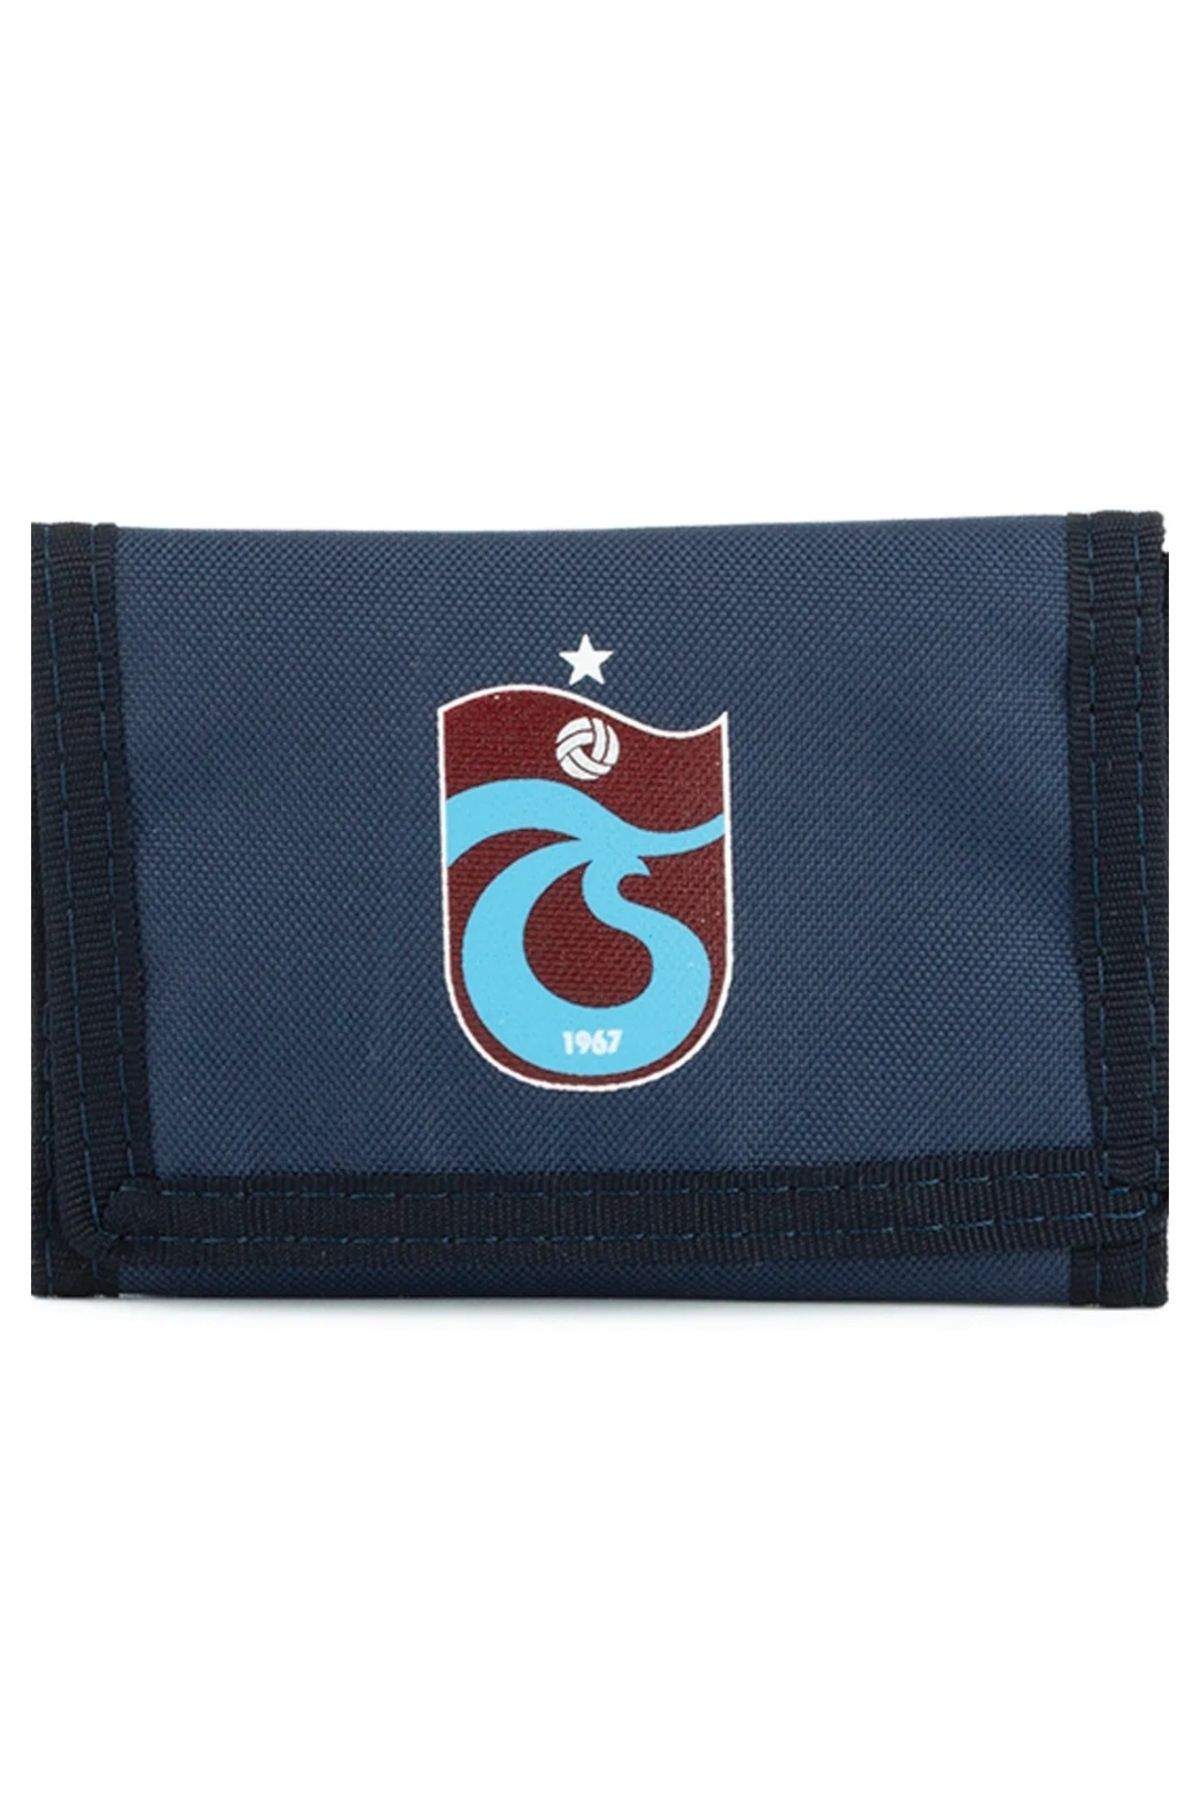 Trabzonspor Erciyes Trabzonspor lisanslı orijinal cüzdan